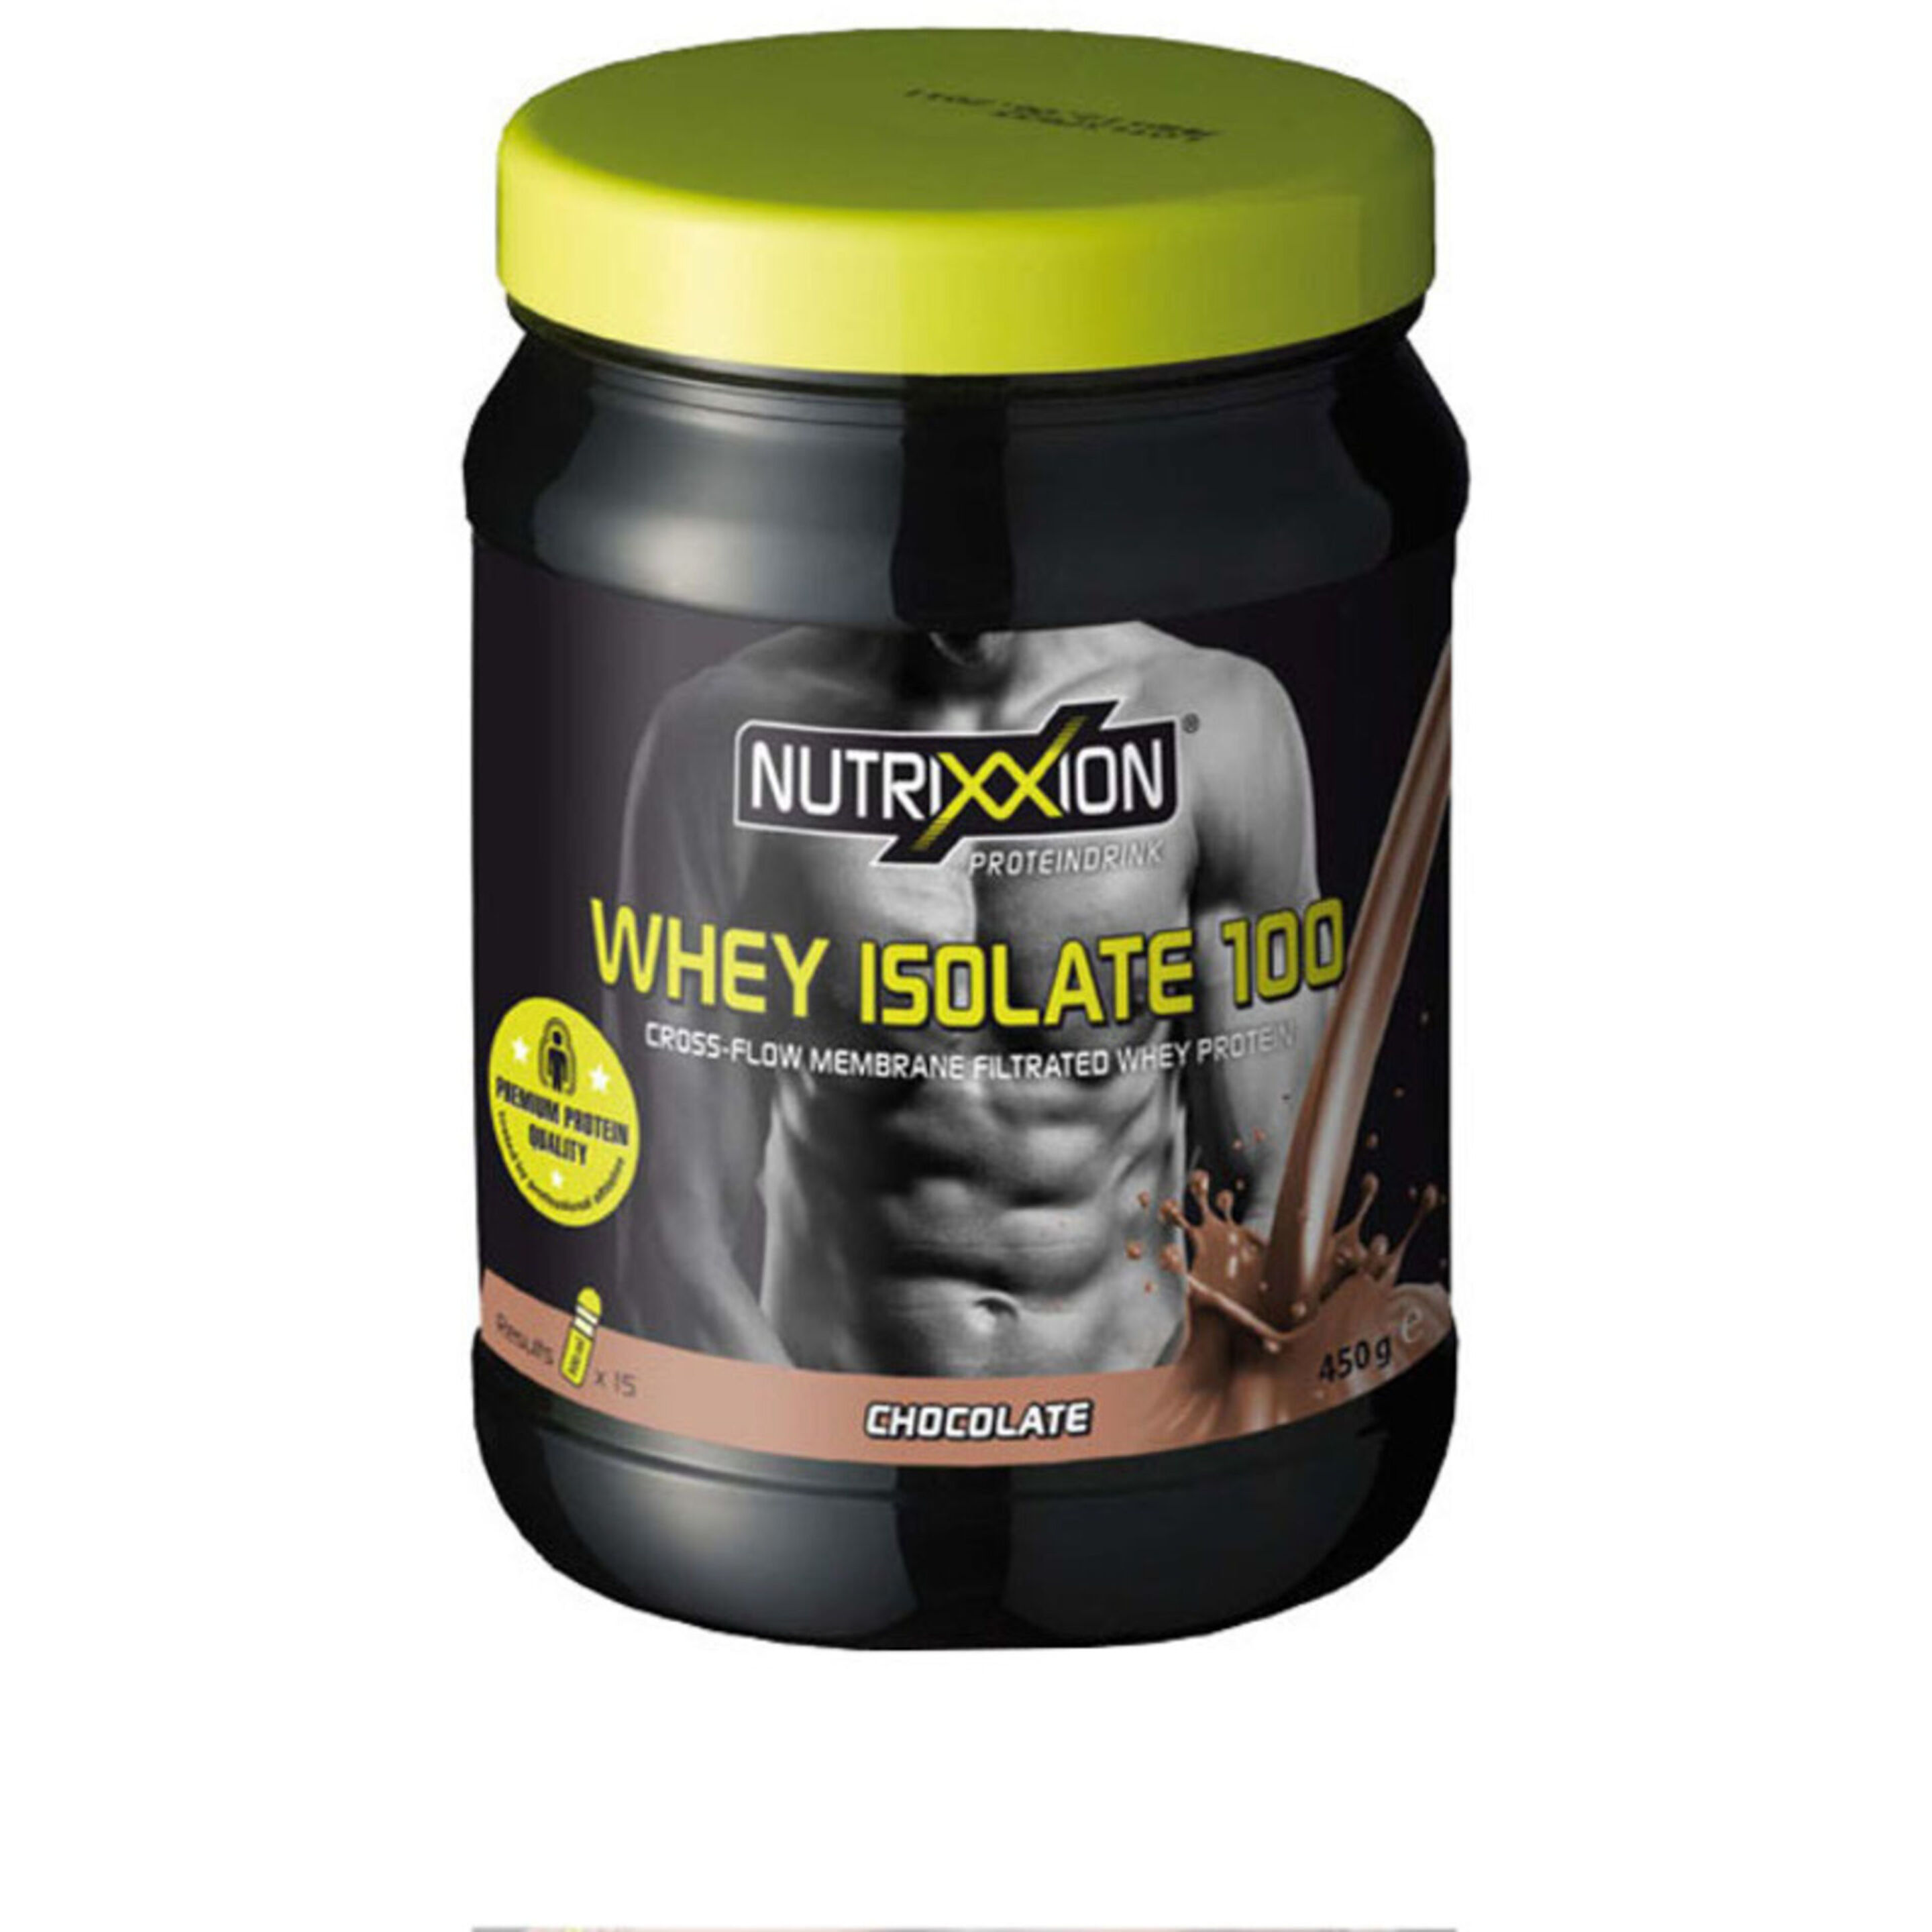 Batidido Proteinas Nutrixxion Whey Isolate Chocolate 450g